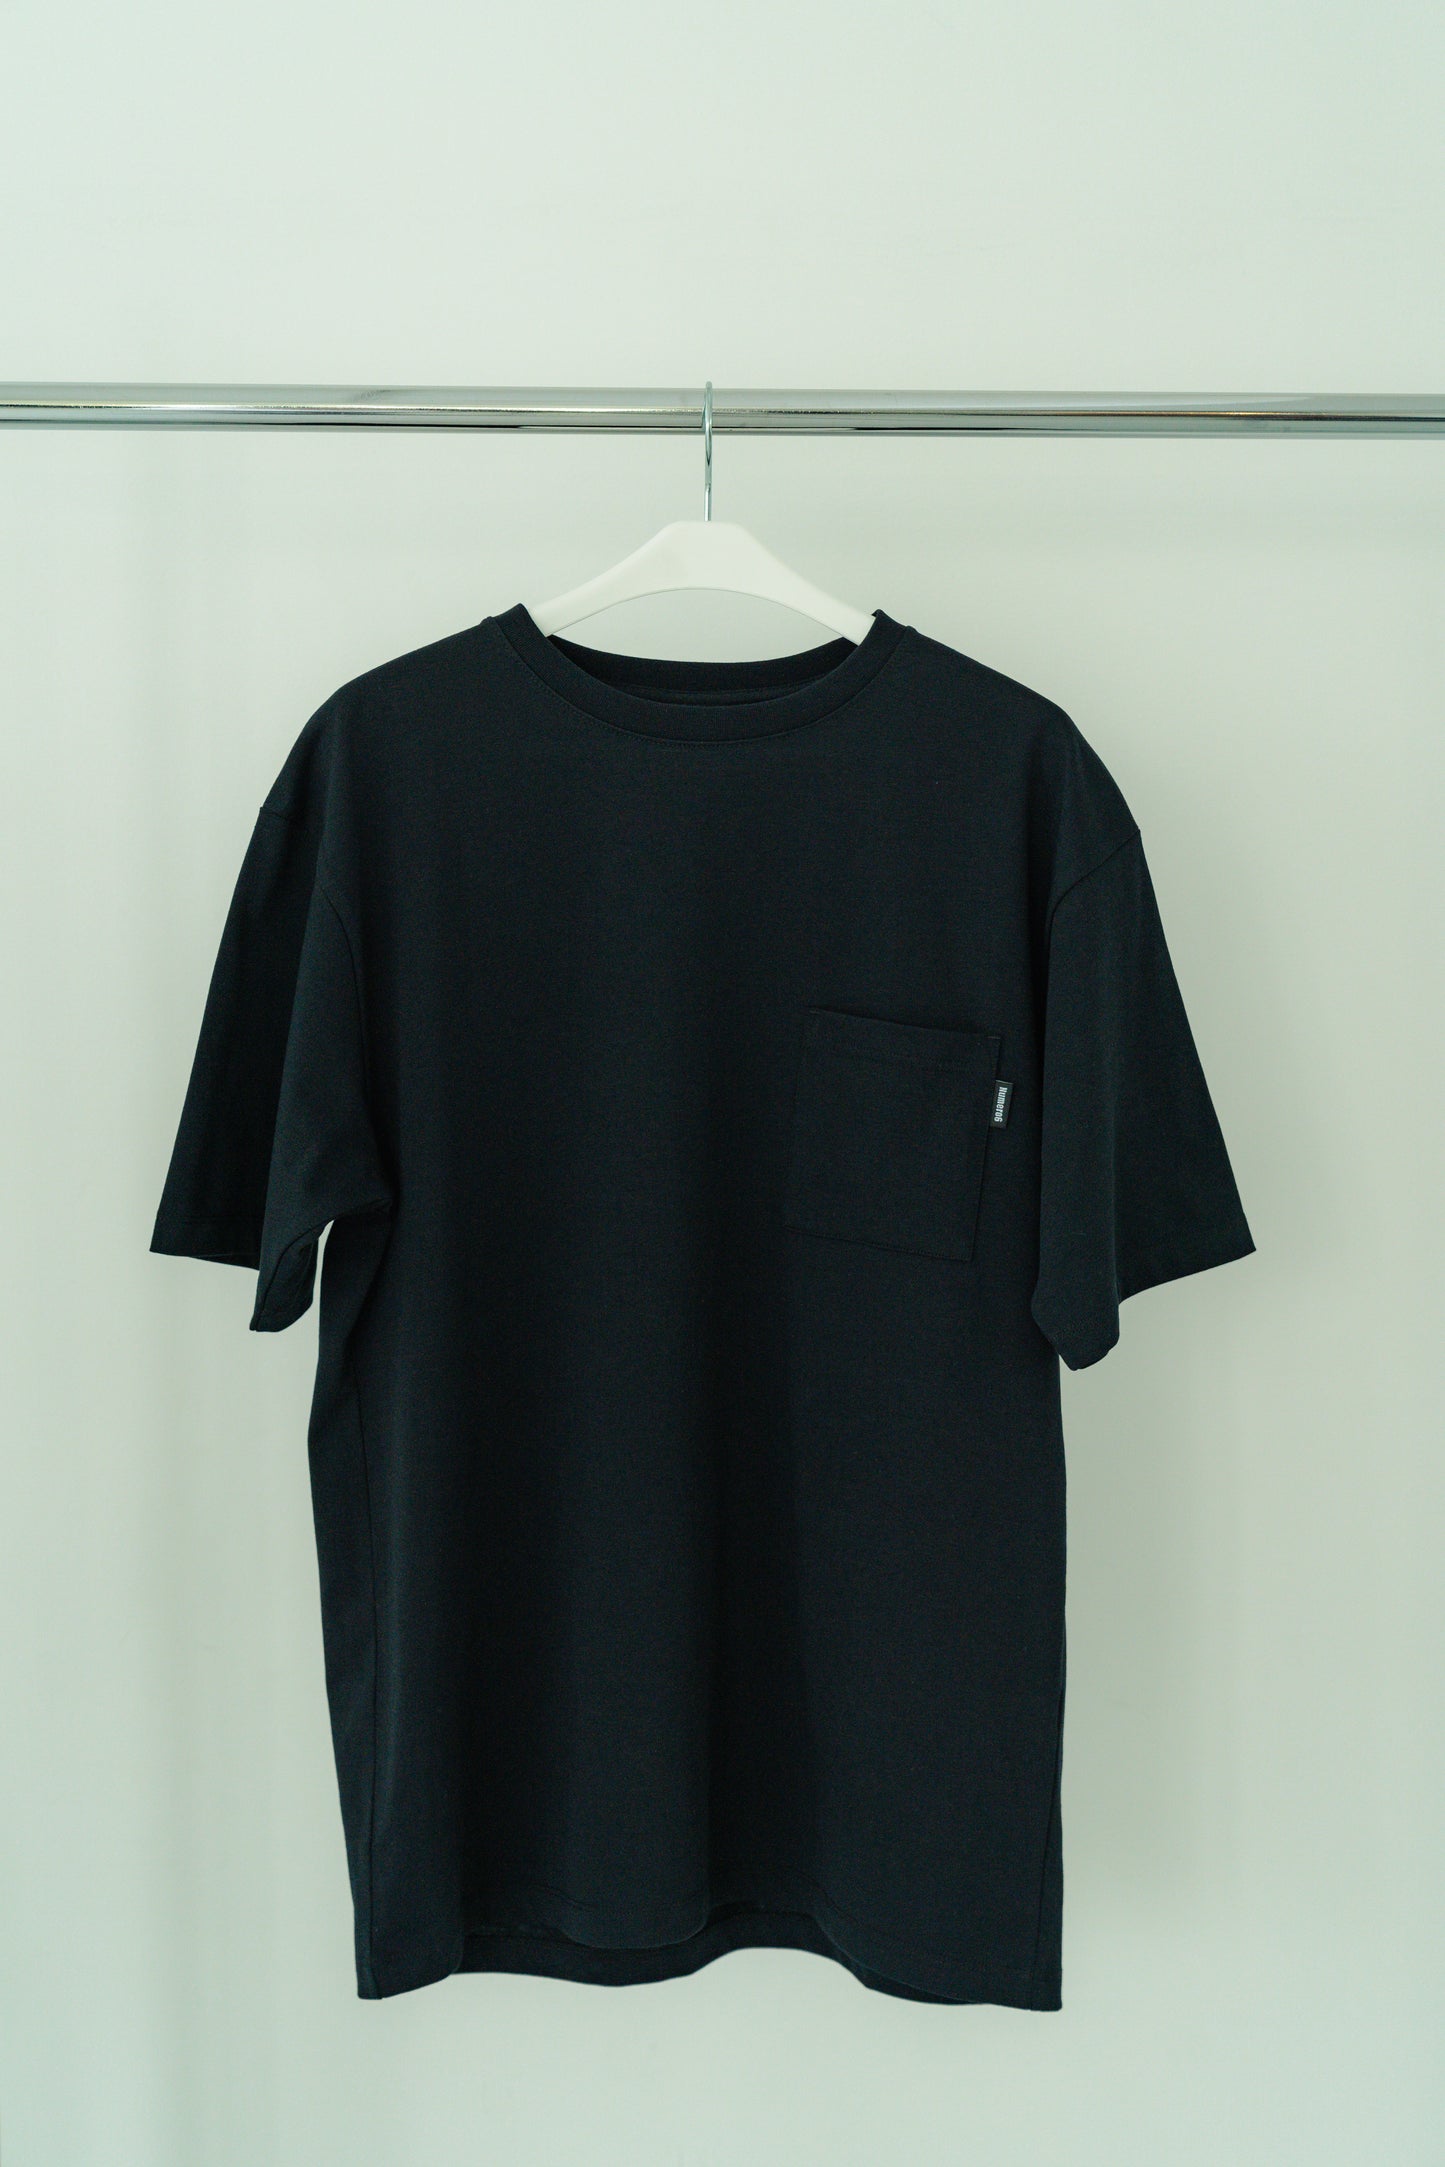 N6 Half sleeve Pocket T-Shirts【BLACK】(N624-001)